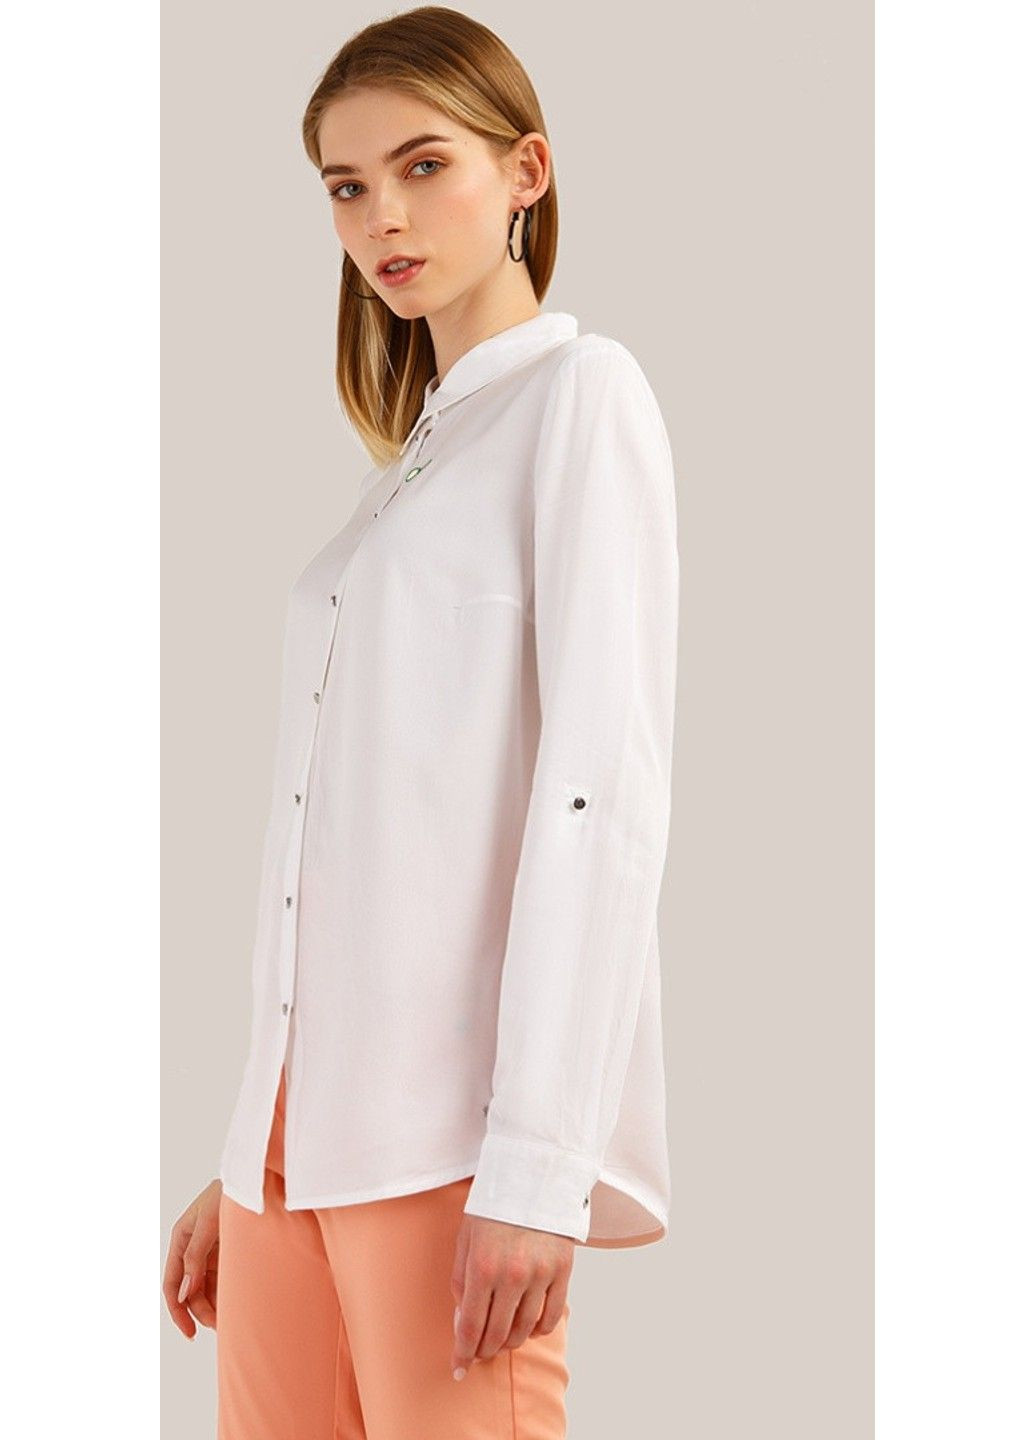 Белая летняя рубашка s19-14010-201 Finn Flare